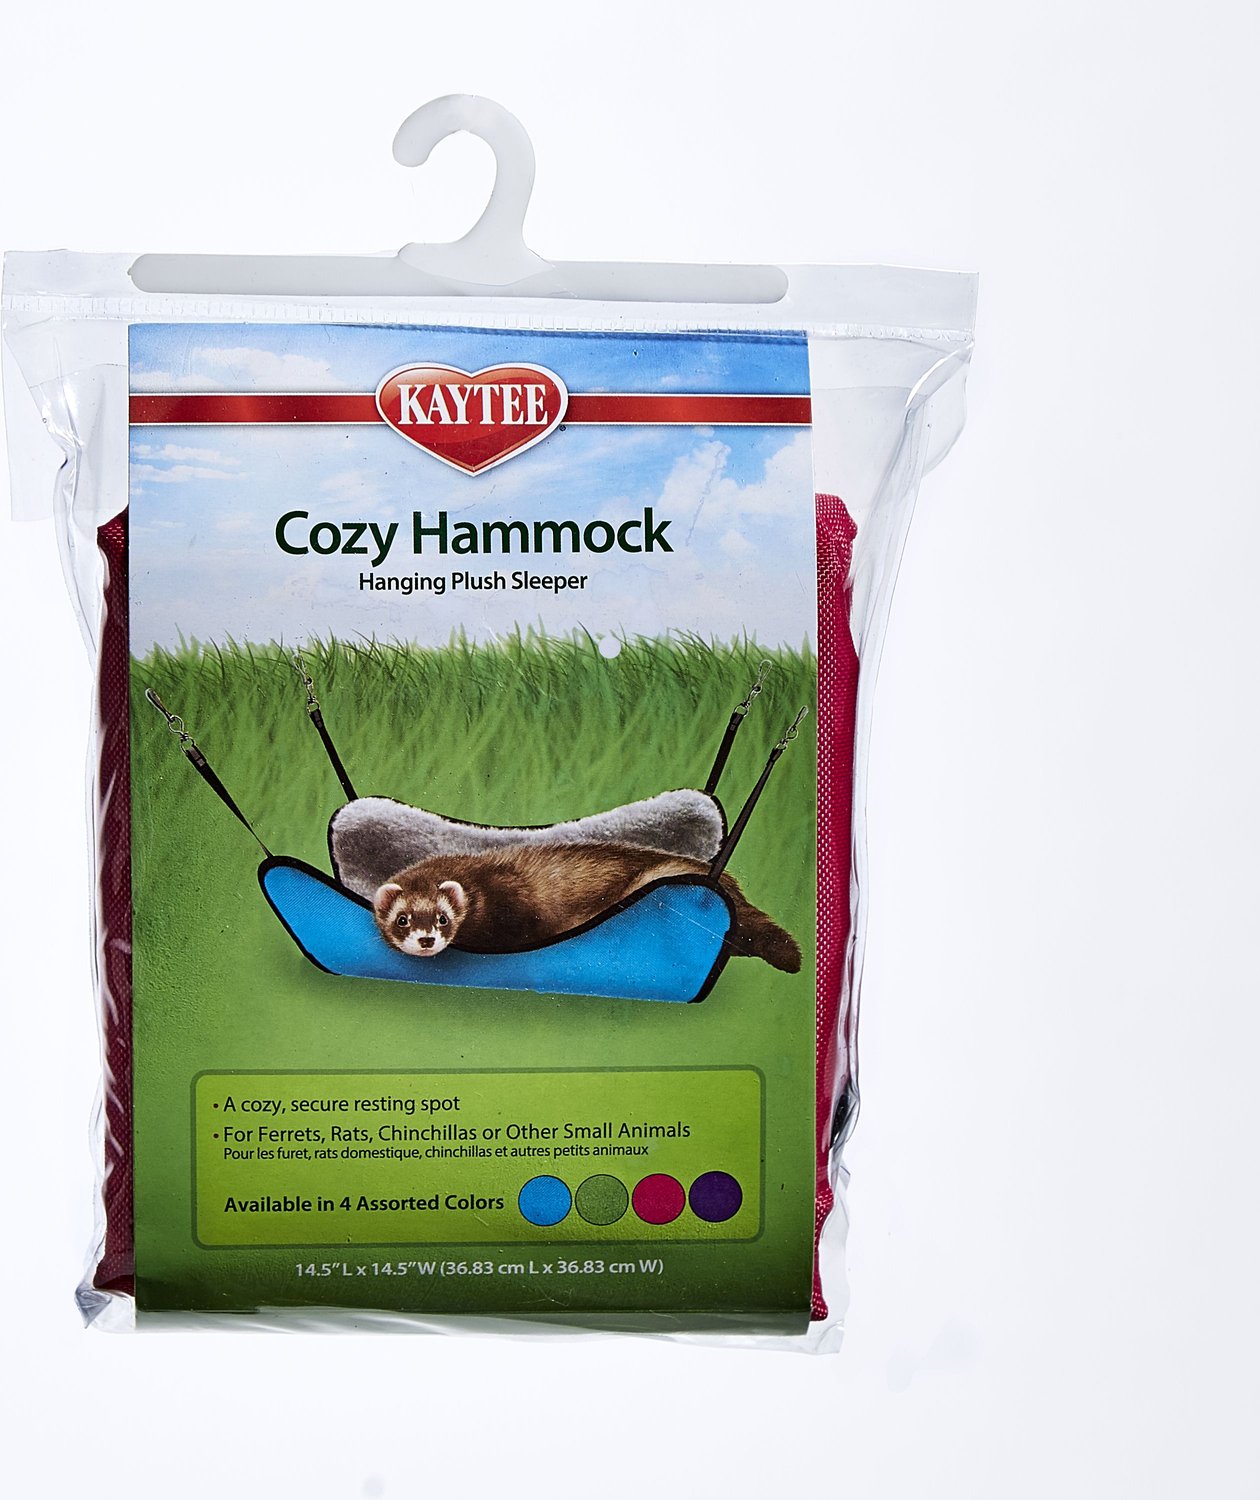 5. Kaytee Small Animal Plush Sleeper Hammock